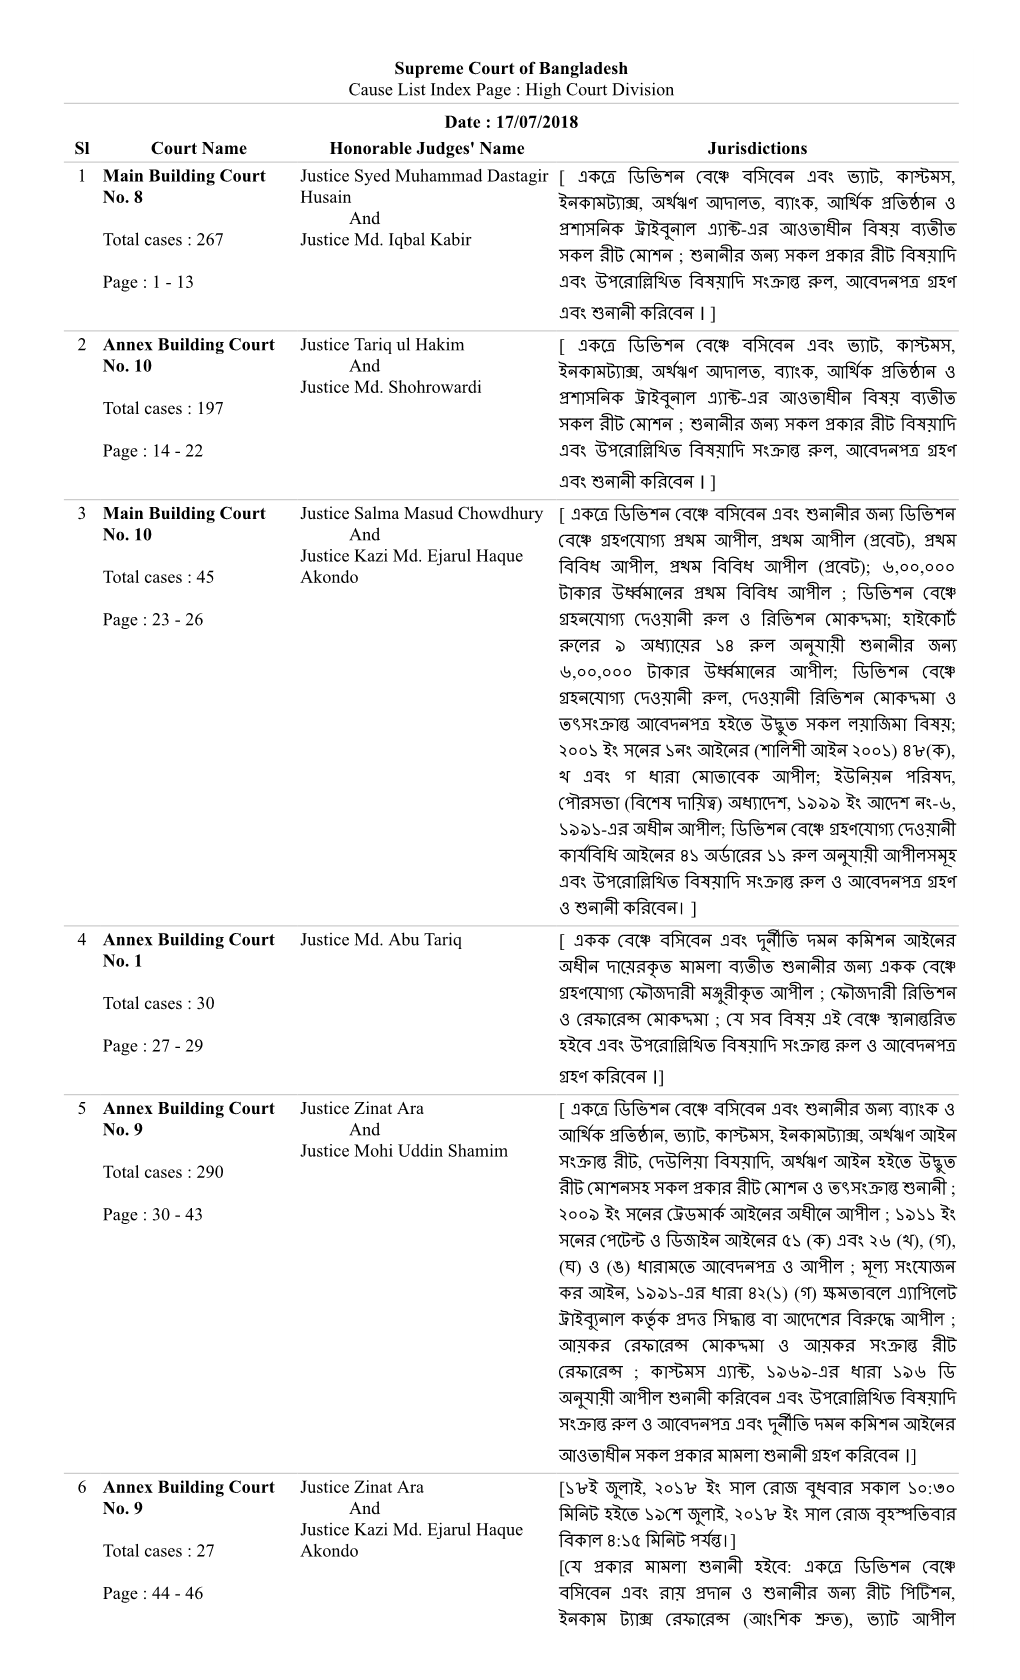 Supreme Court of Bangladesh Cause List Index Page